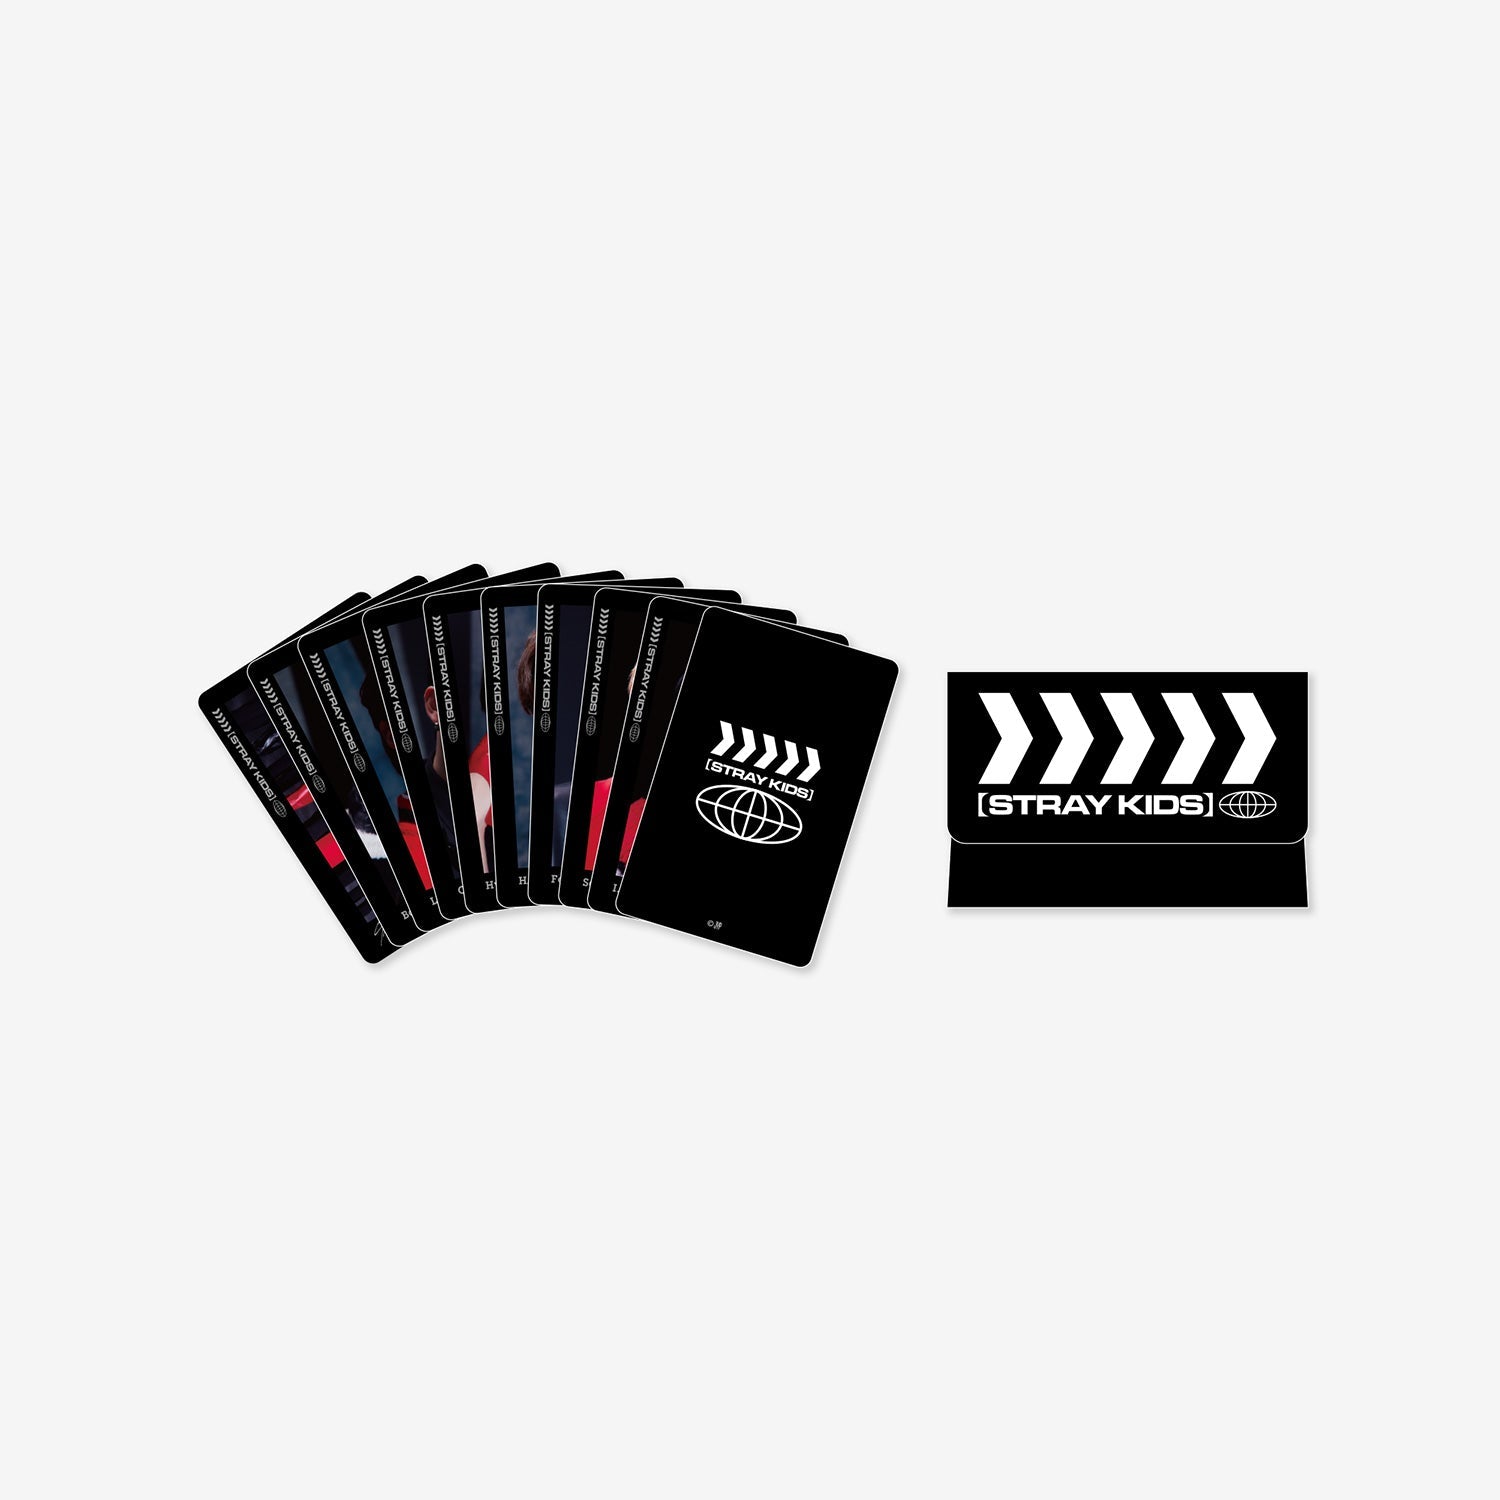 Stray Kids Photocards - Social Path/Super Bowl